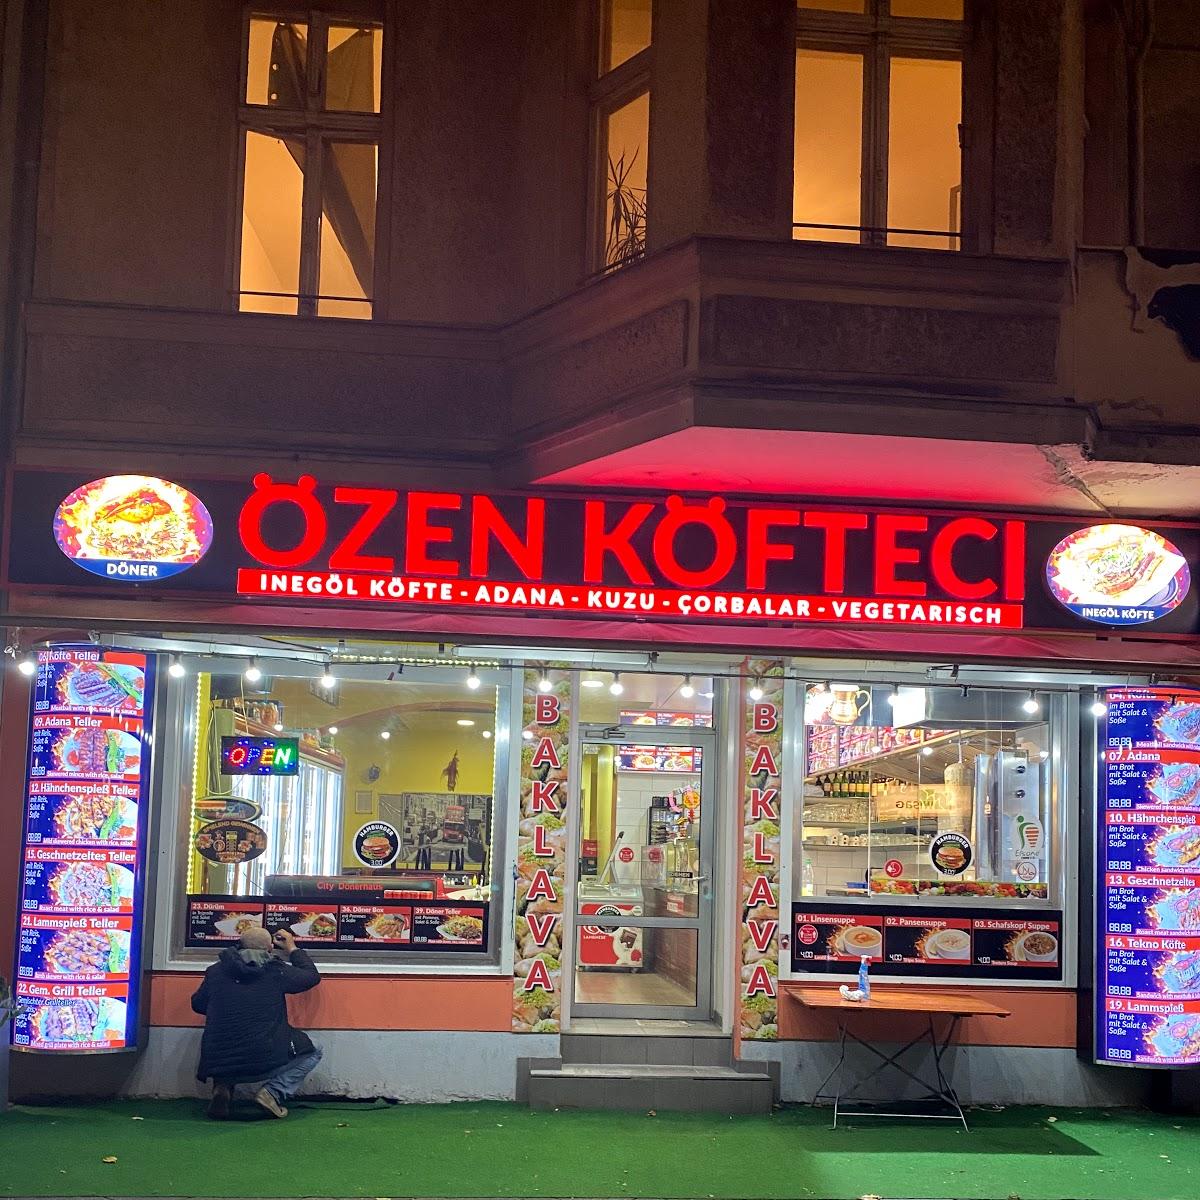 Restaurant "Özen köfteci" in Berlin